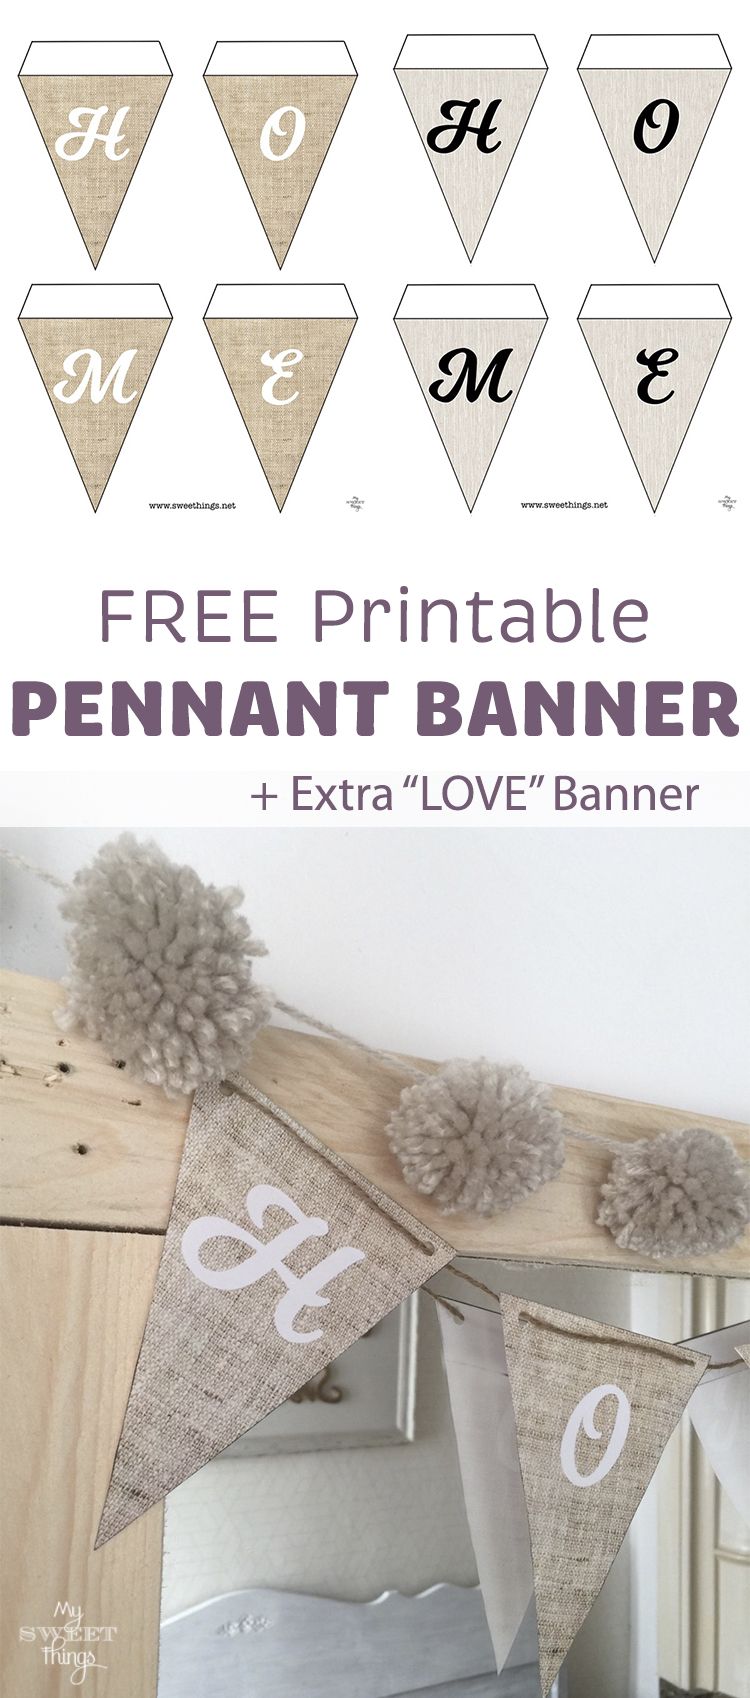 Home Decor - Free Printable Paper Pennant Banner · Via www.sweethings.net 